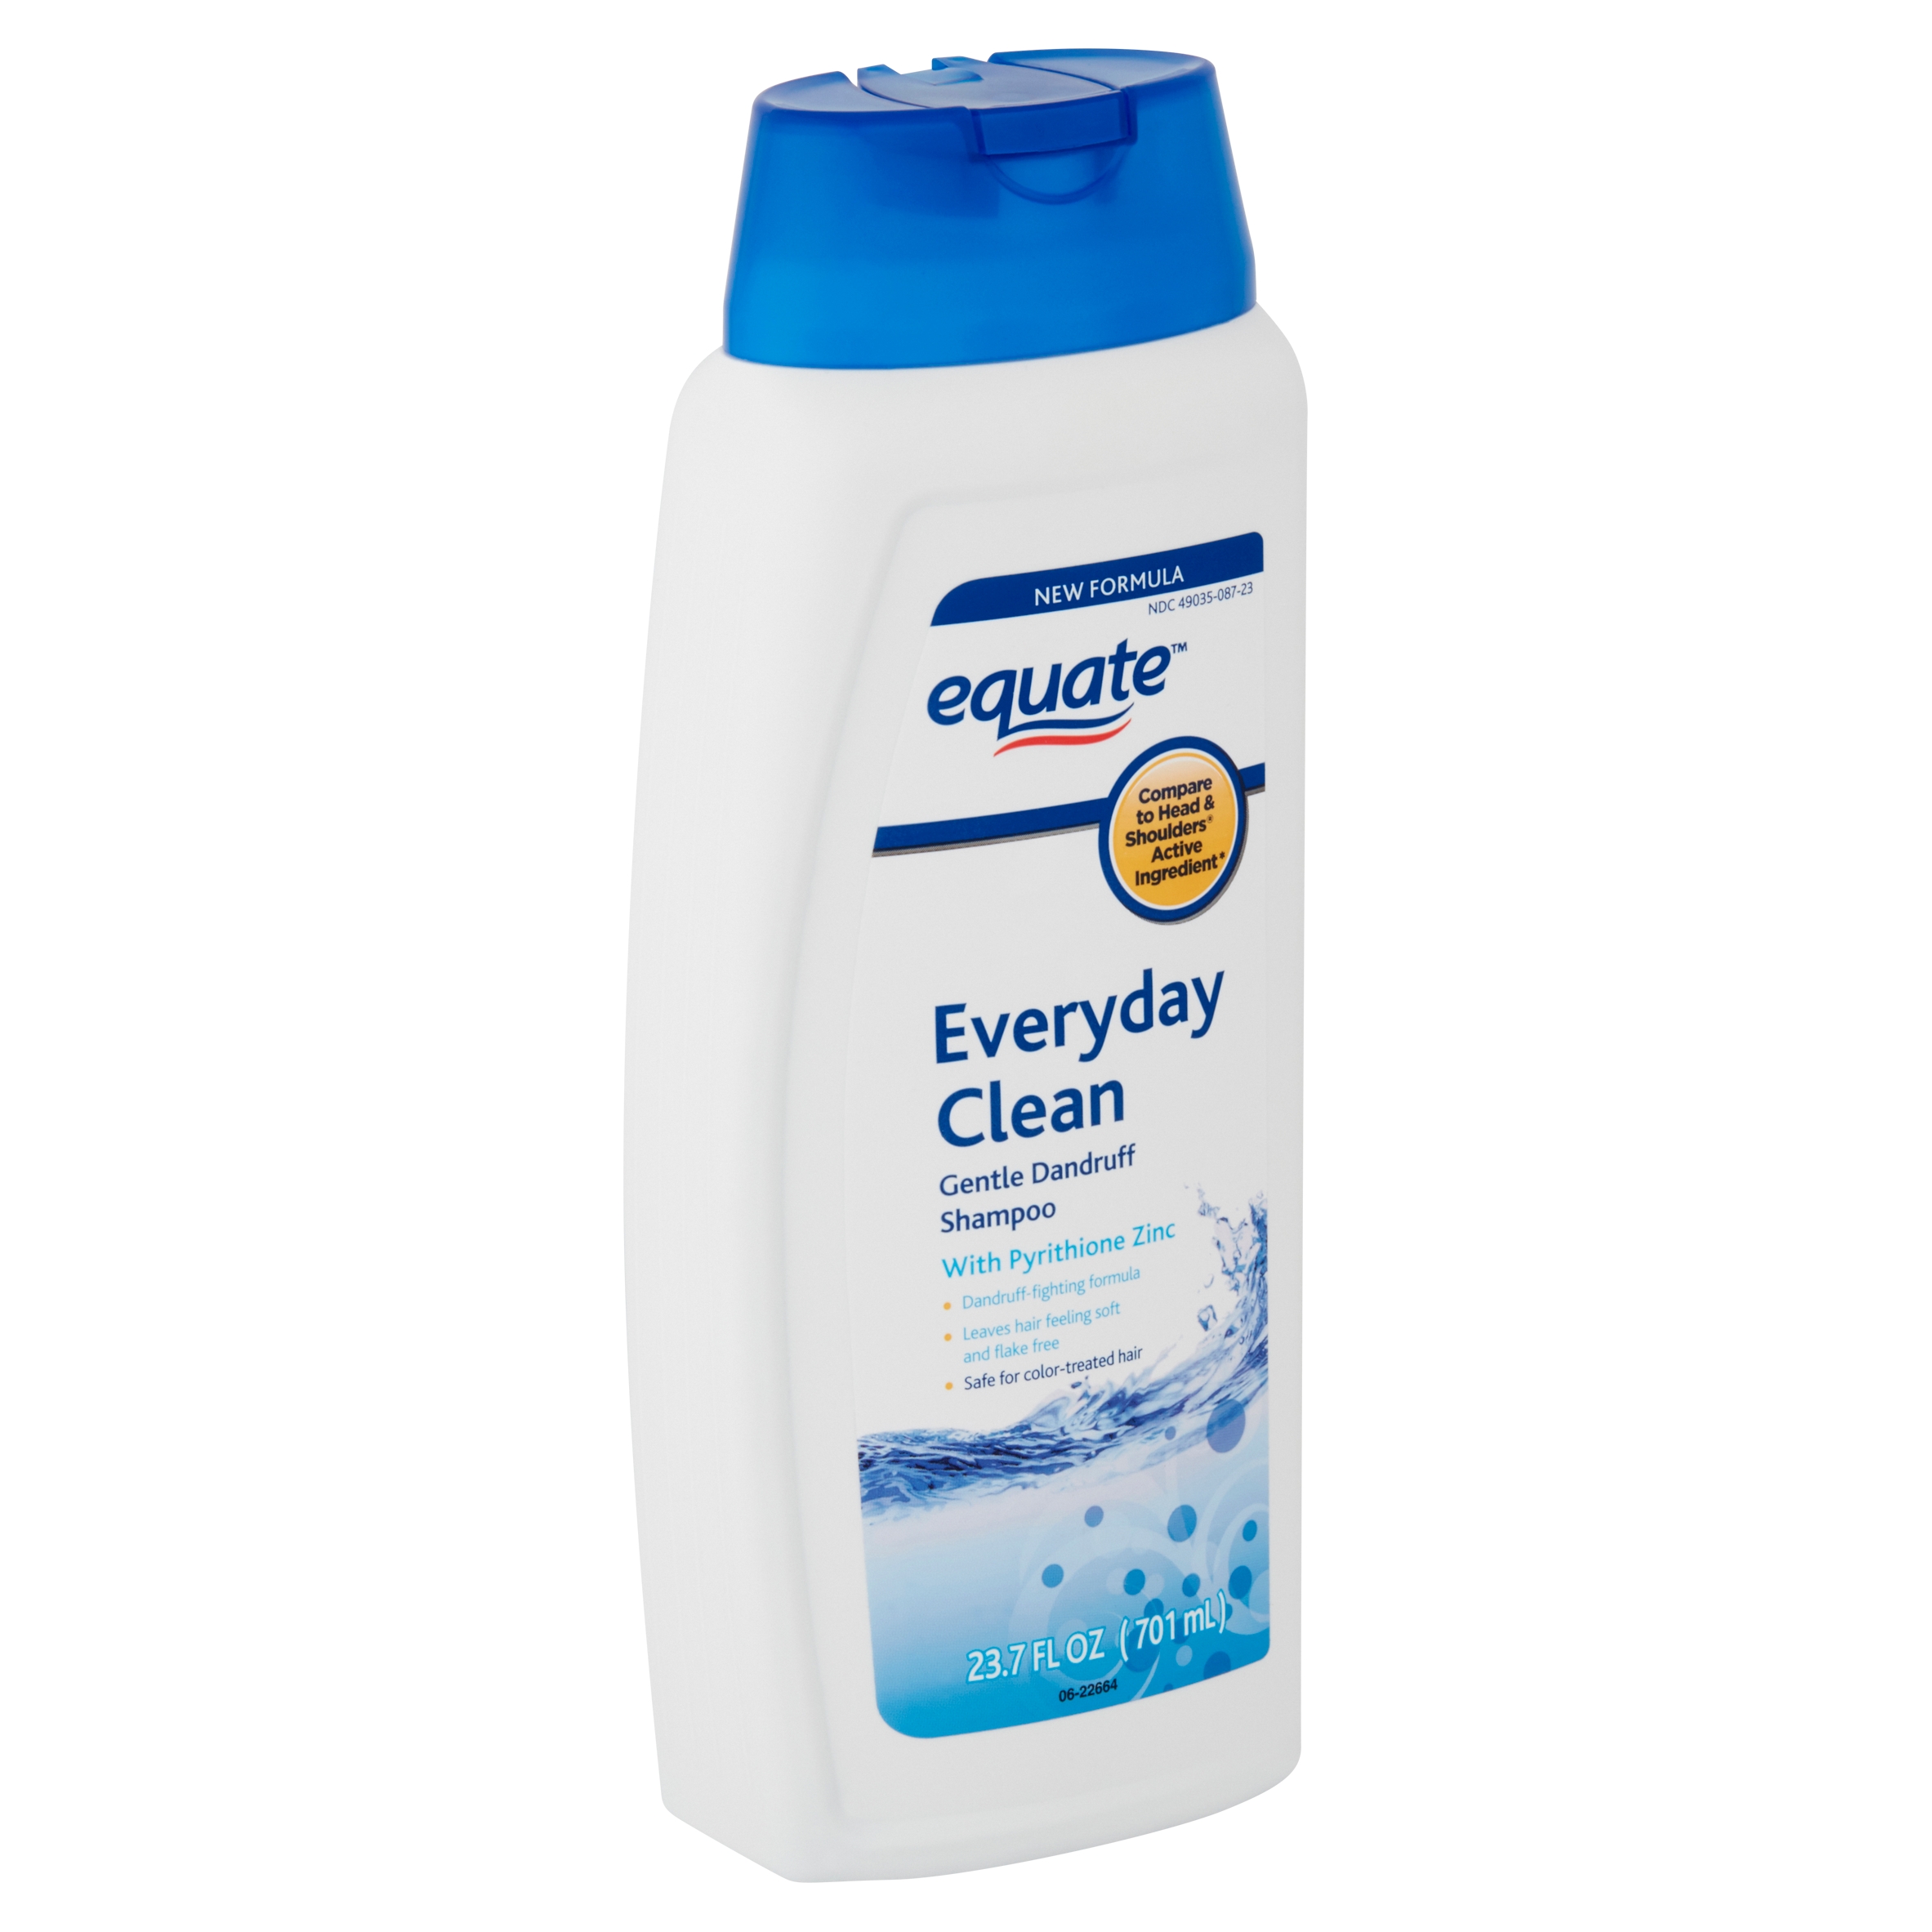 Equate Everyday Clean Gentle Dandruff Shampoo, 23.7 fl oz - image 1 of 9